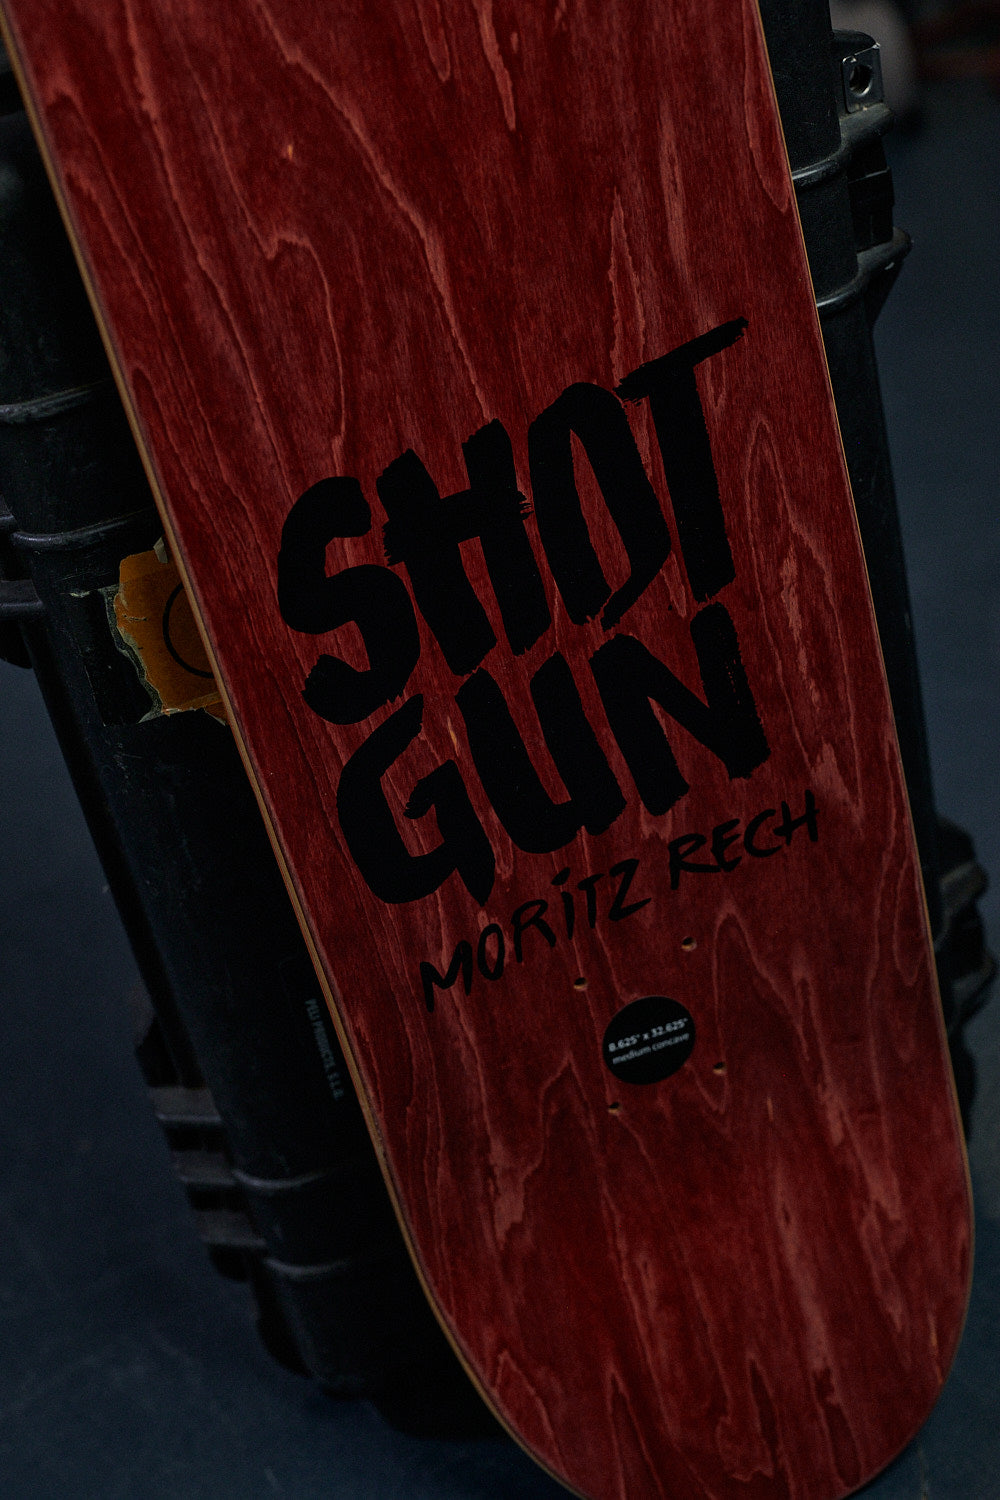 Shotgun Signature Skate Deck | Moritz Rech | Fish